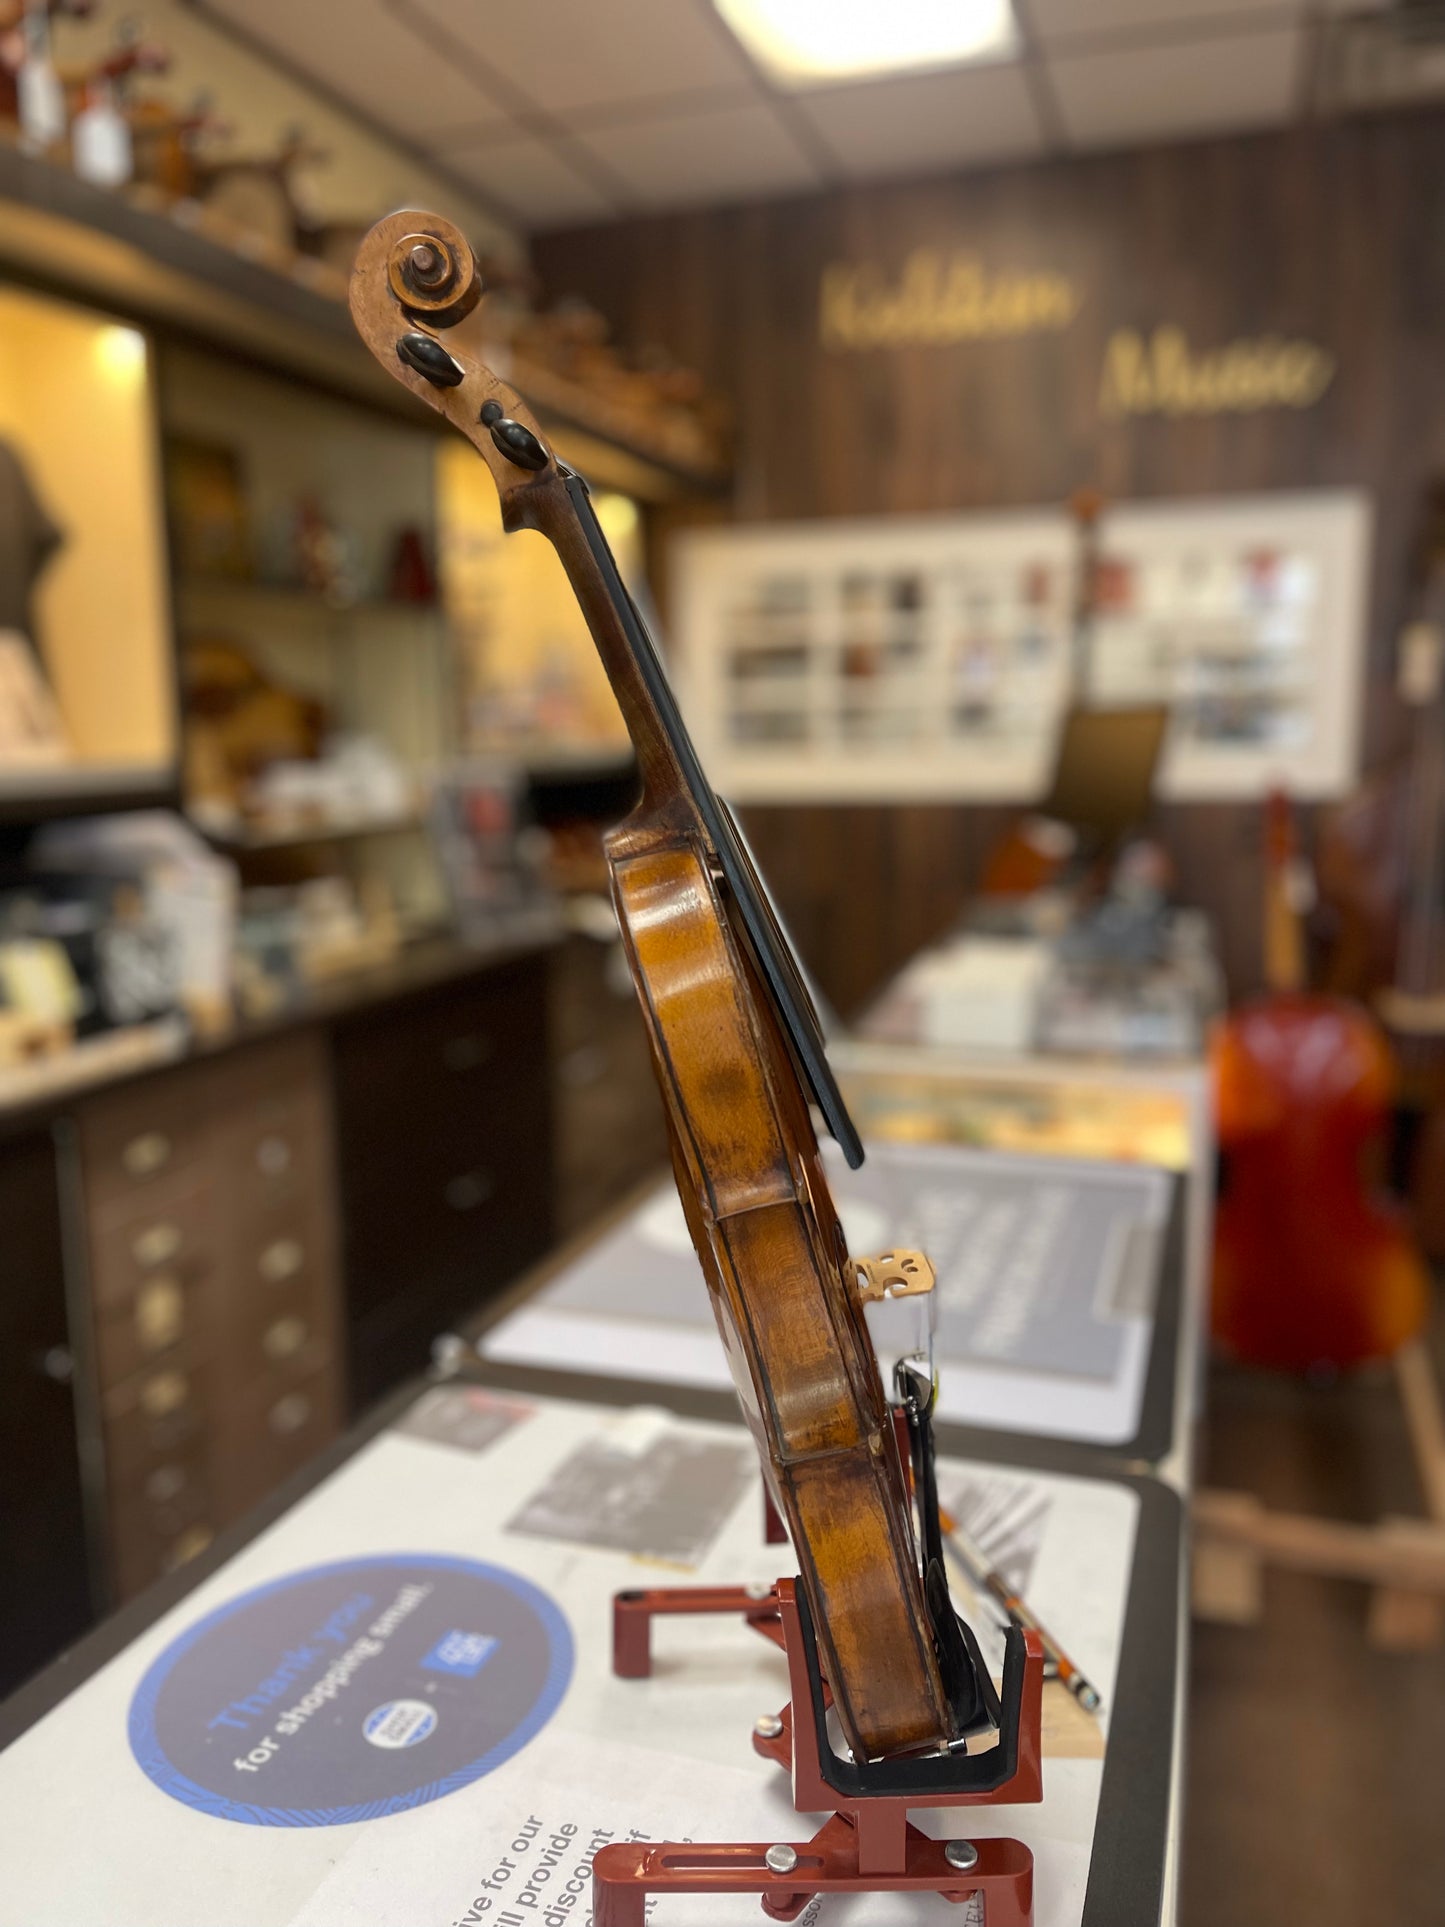 Southern German Violin